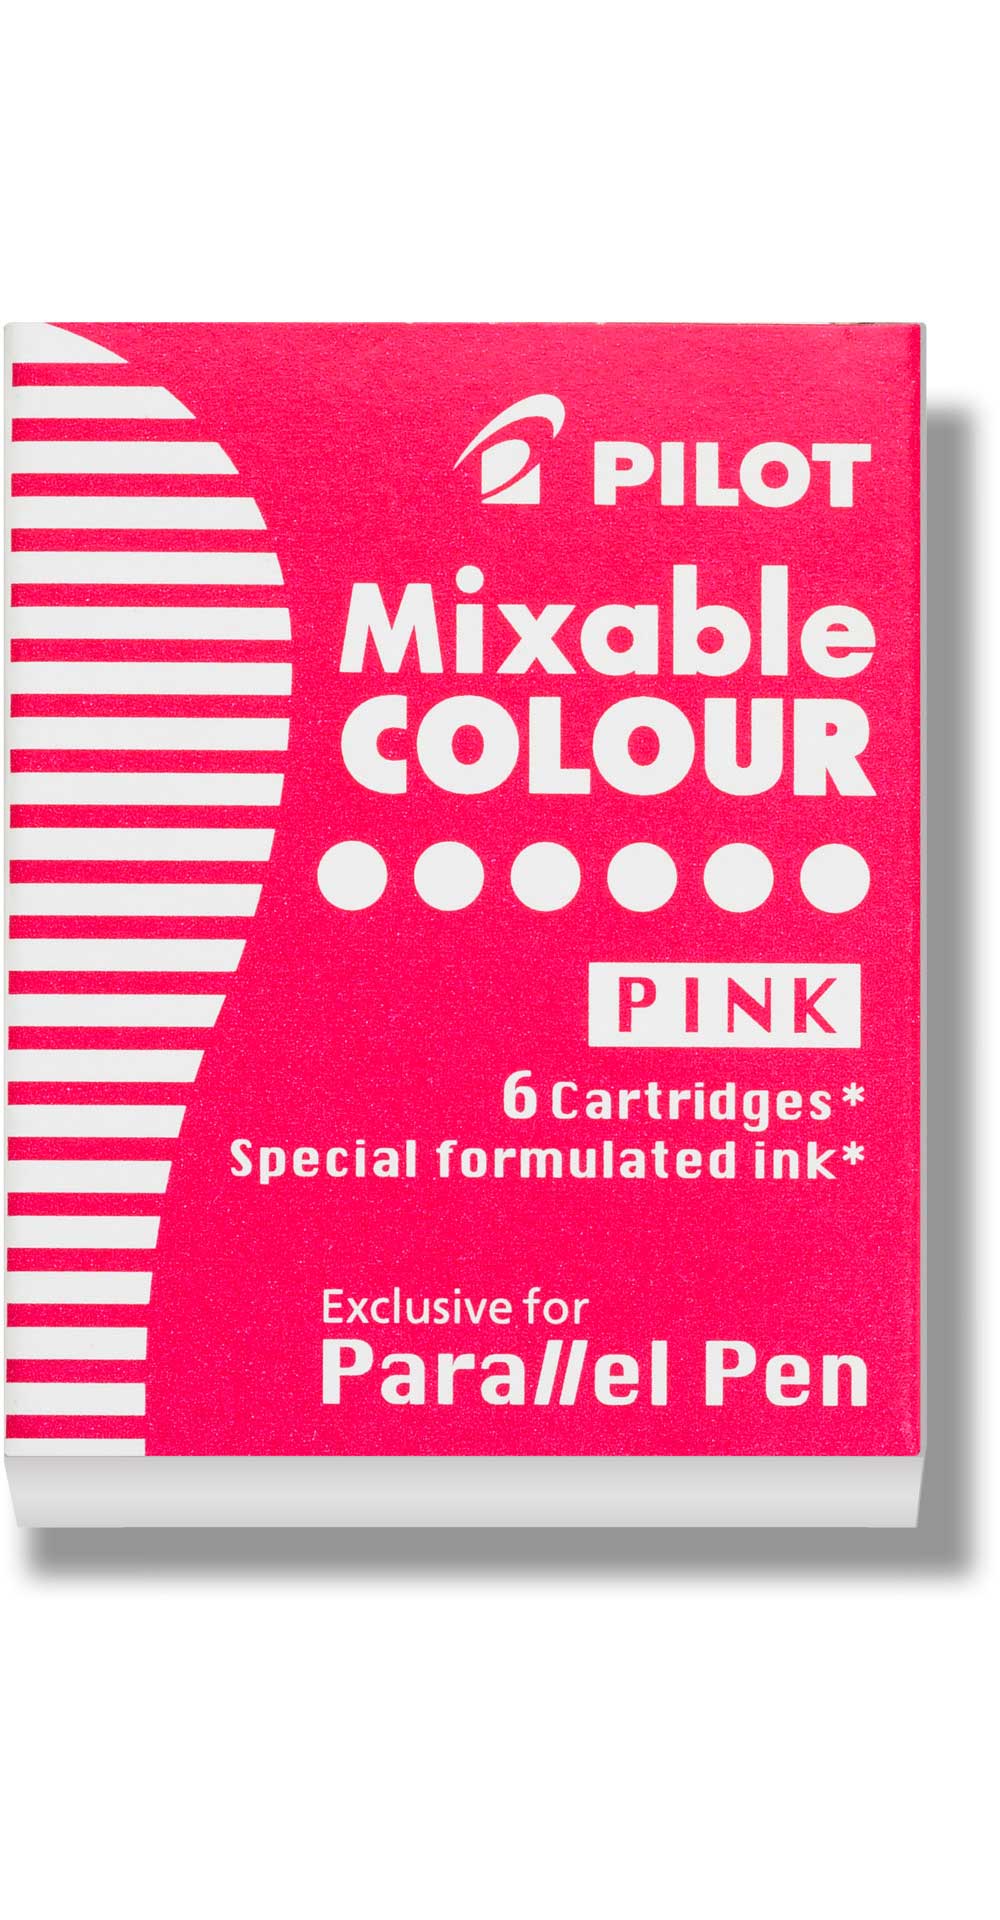 Pilot Mixable Cartridges- Pink